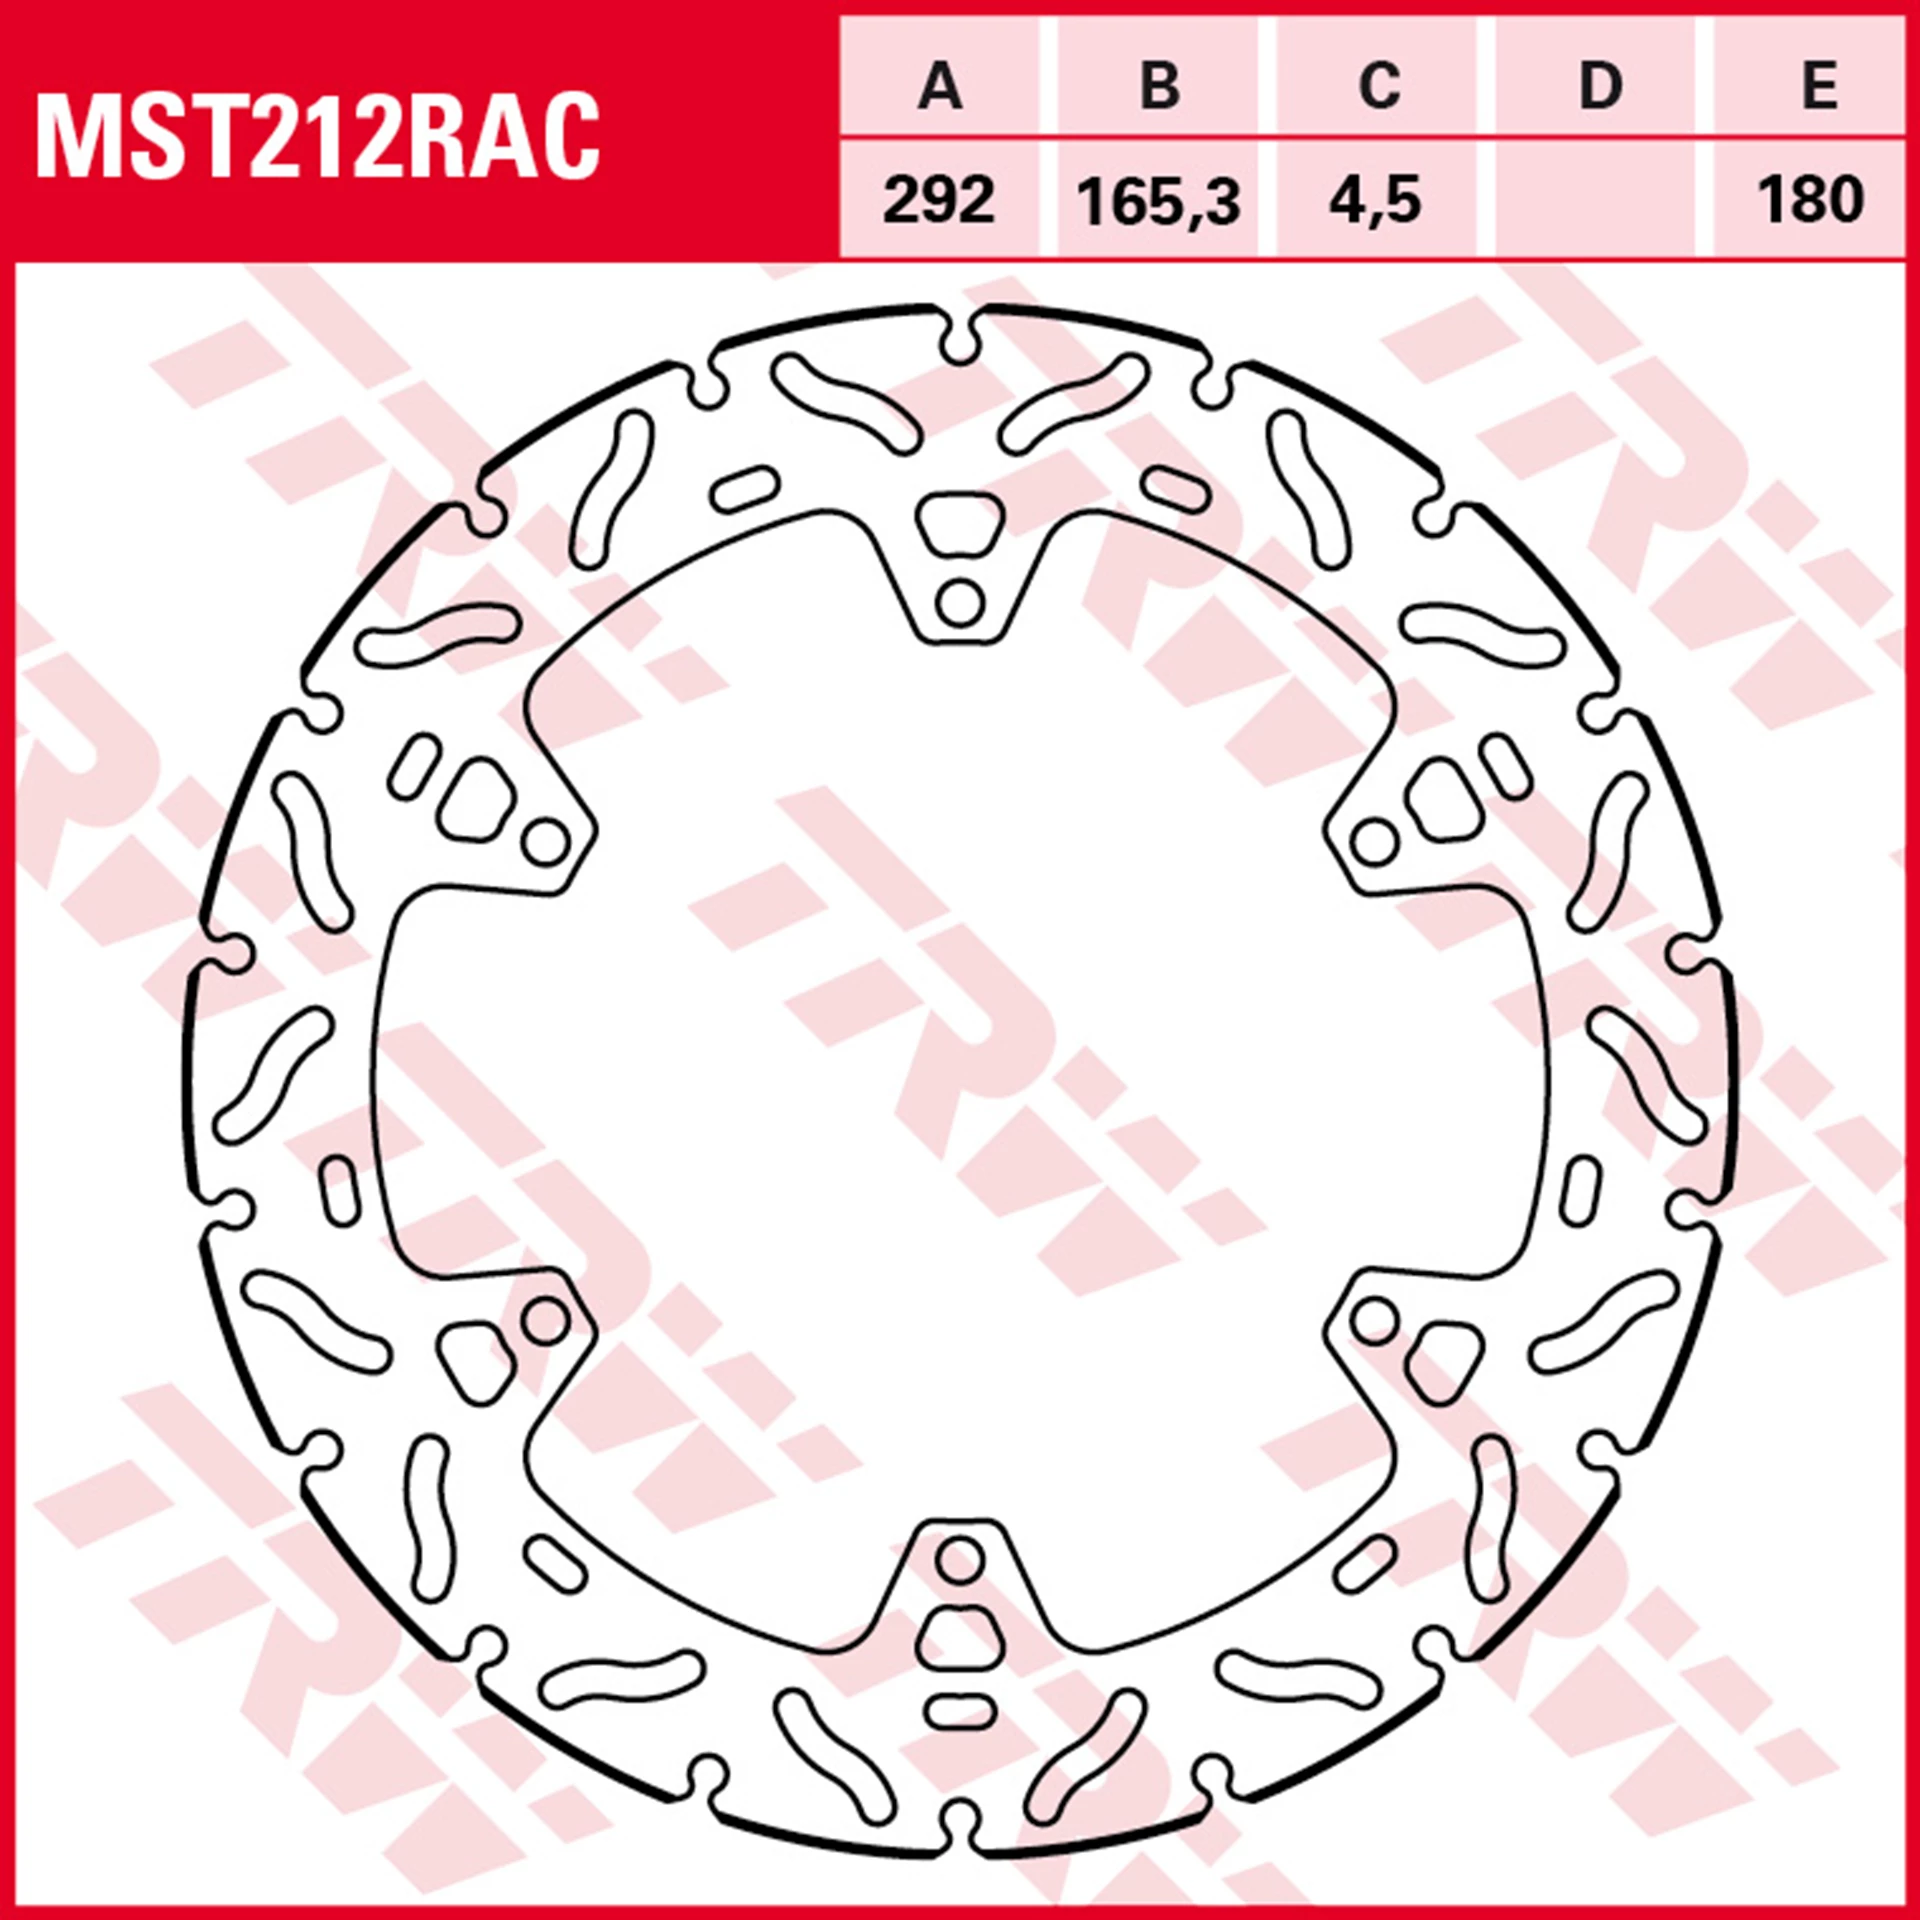 MST212RAC